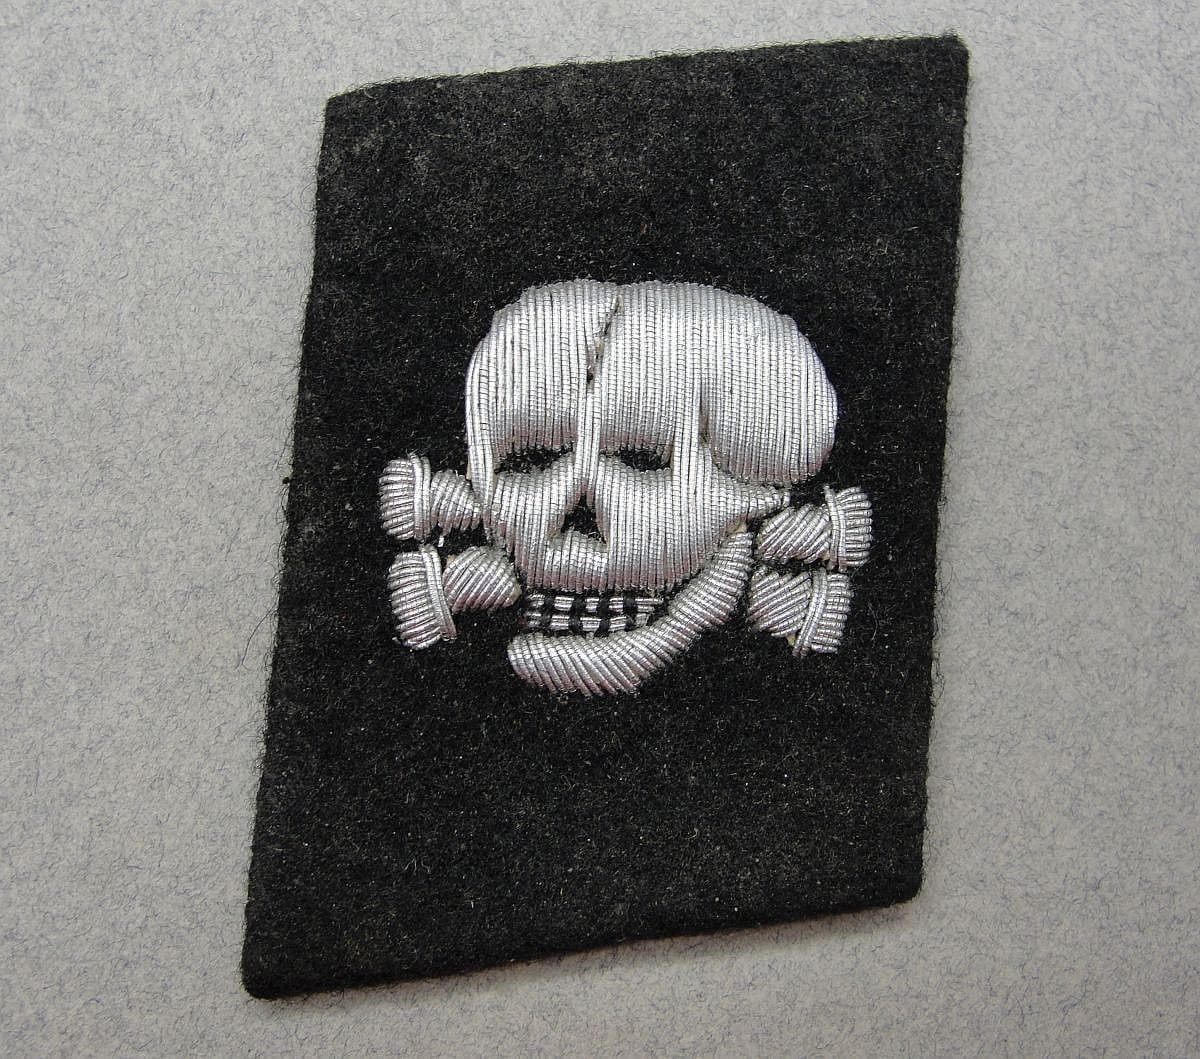 SS Totenkopfvervände (Death Head Units) Skull Collar Tab with SS/RZM Tag